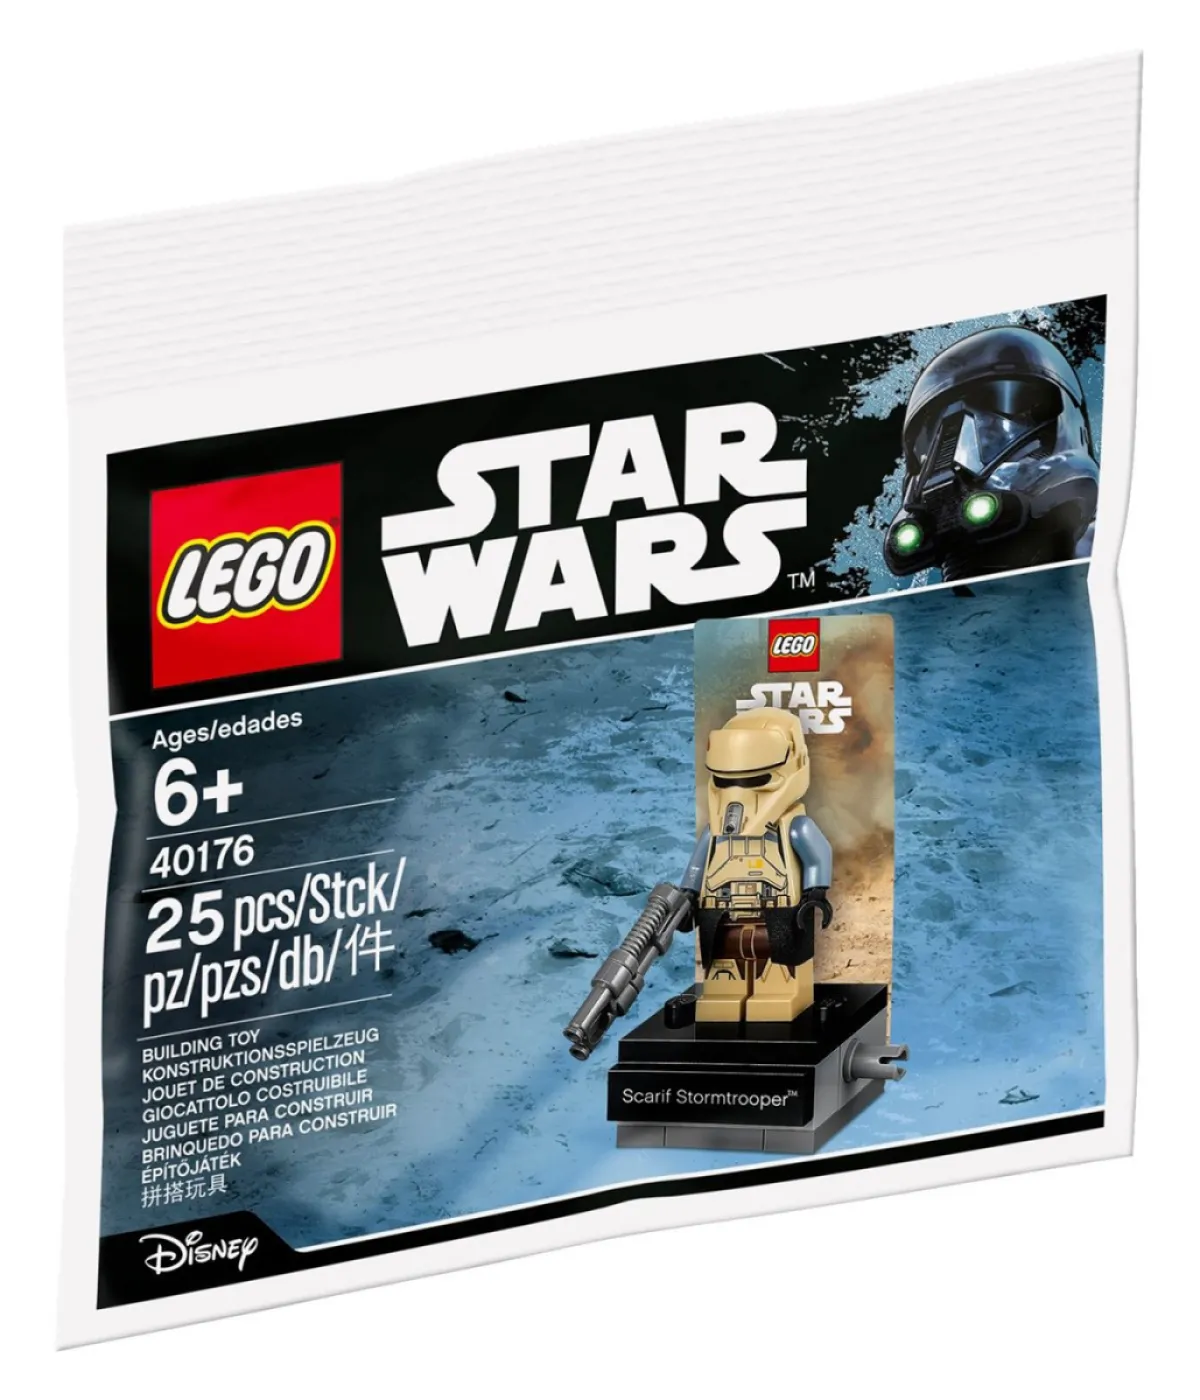 Scarif Stormtrooper LEGO Star Wars minifigure